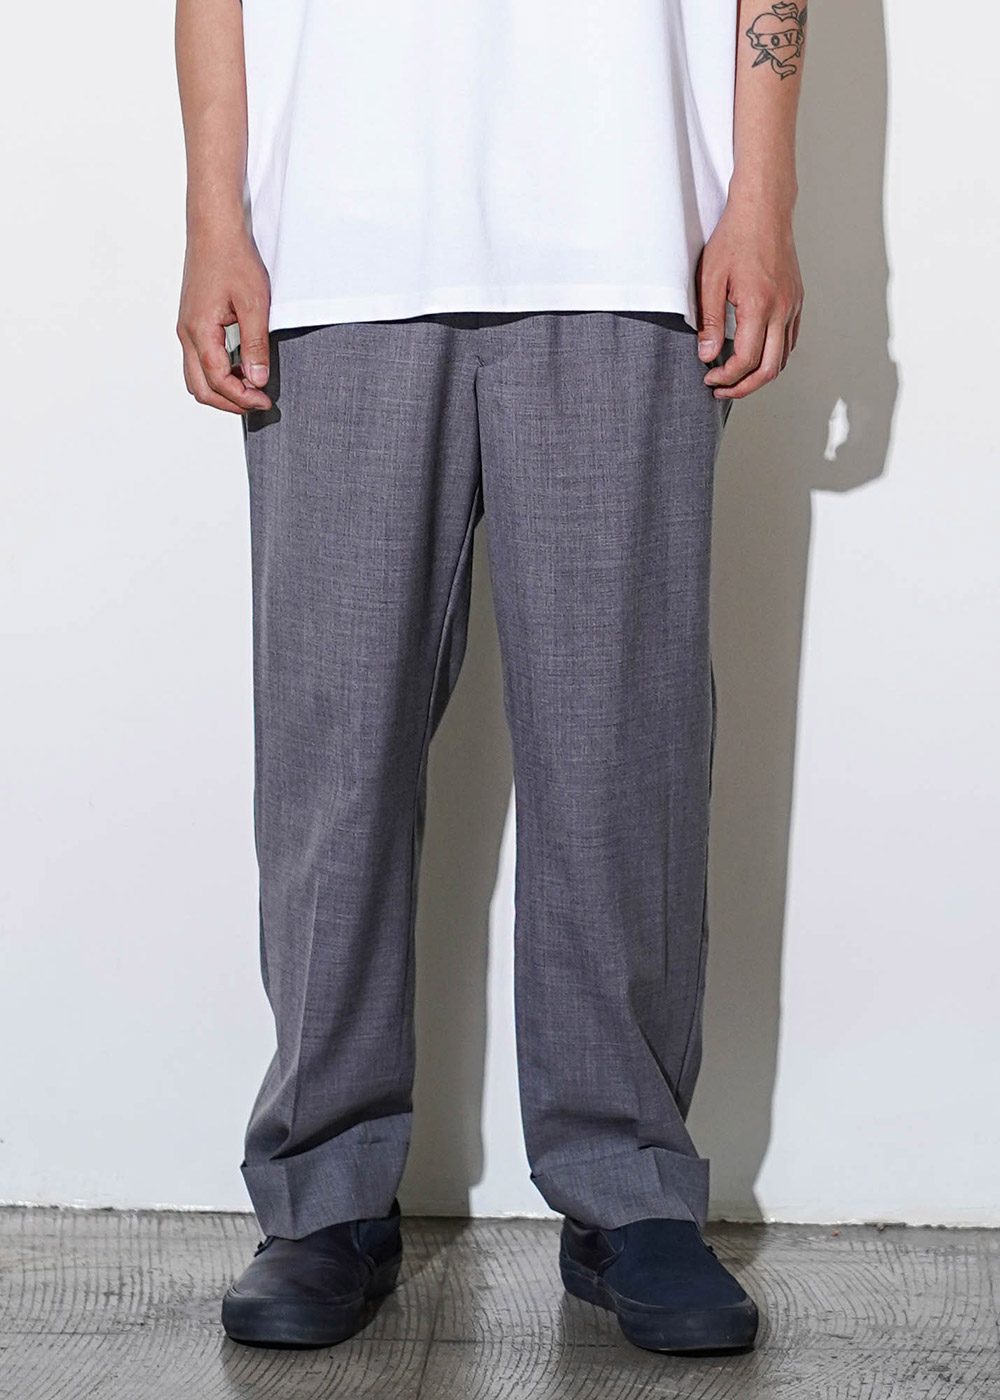 HIGHWATER Pants (Gray)